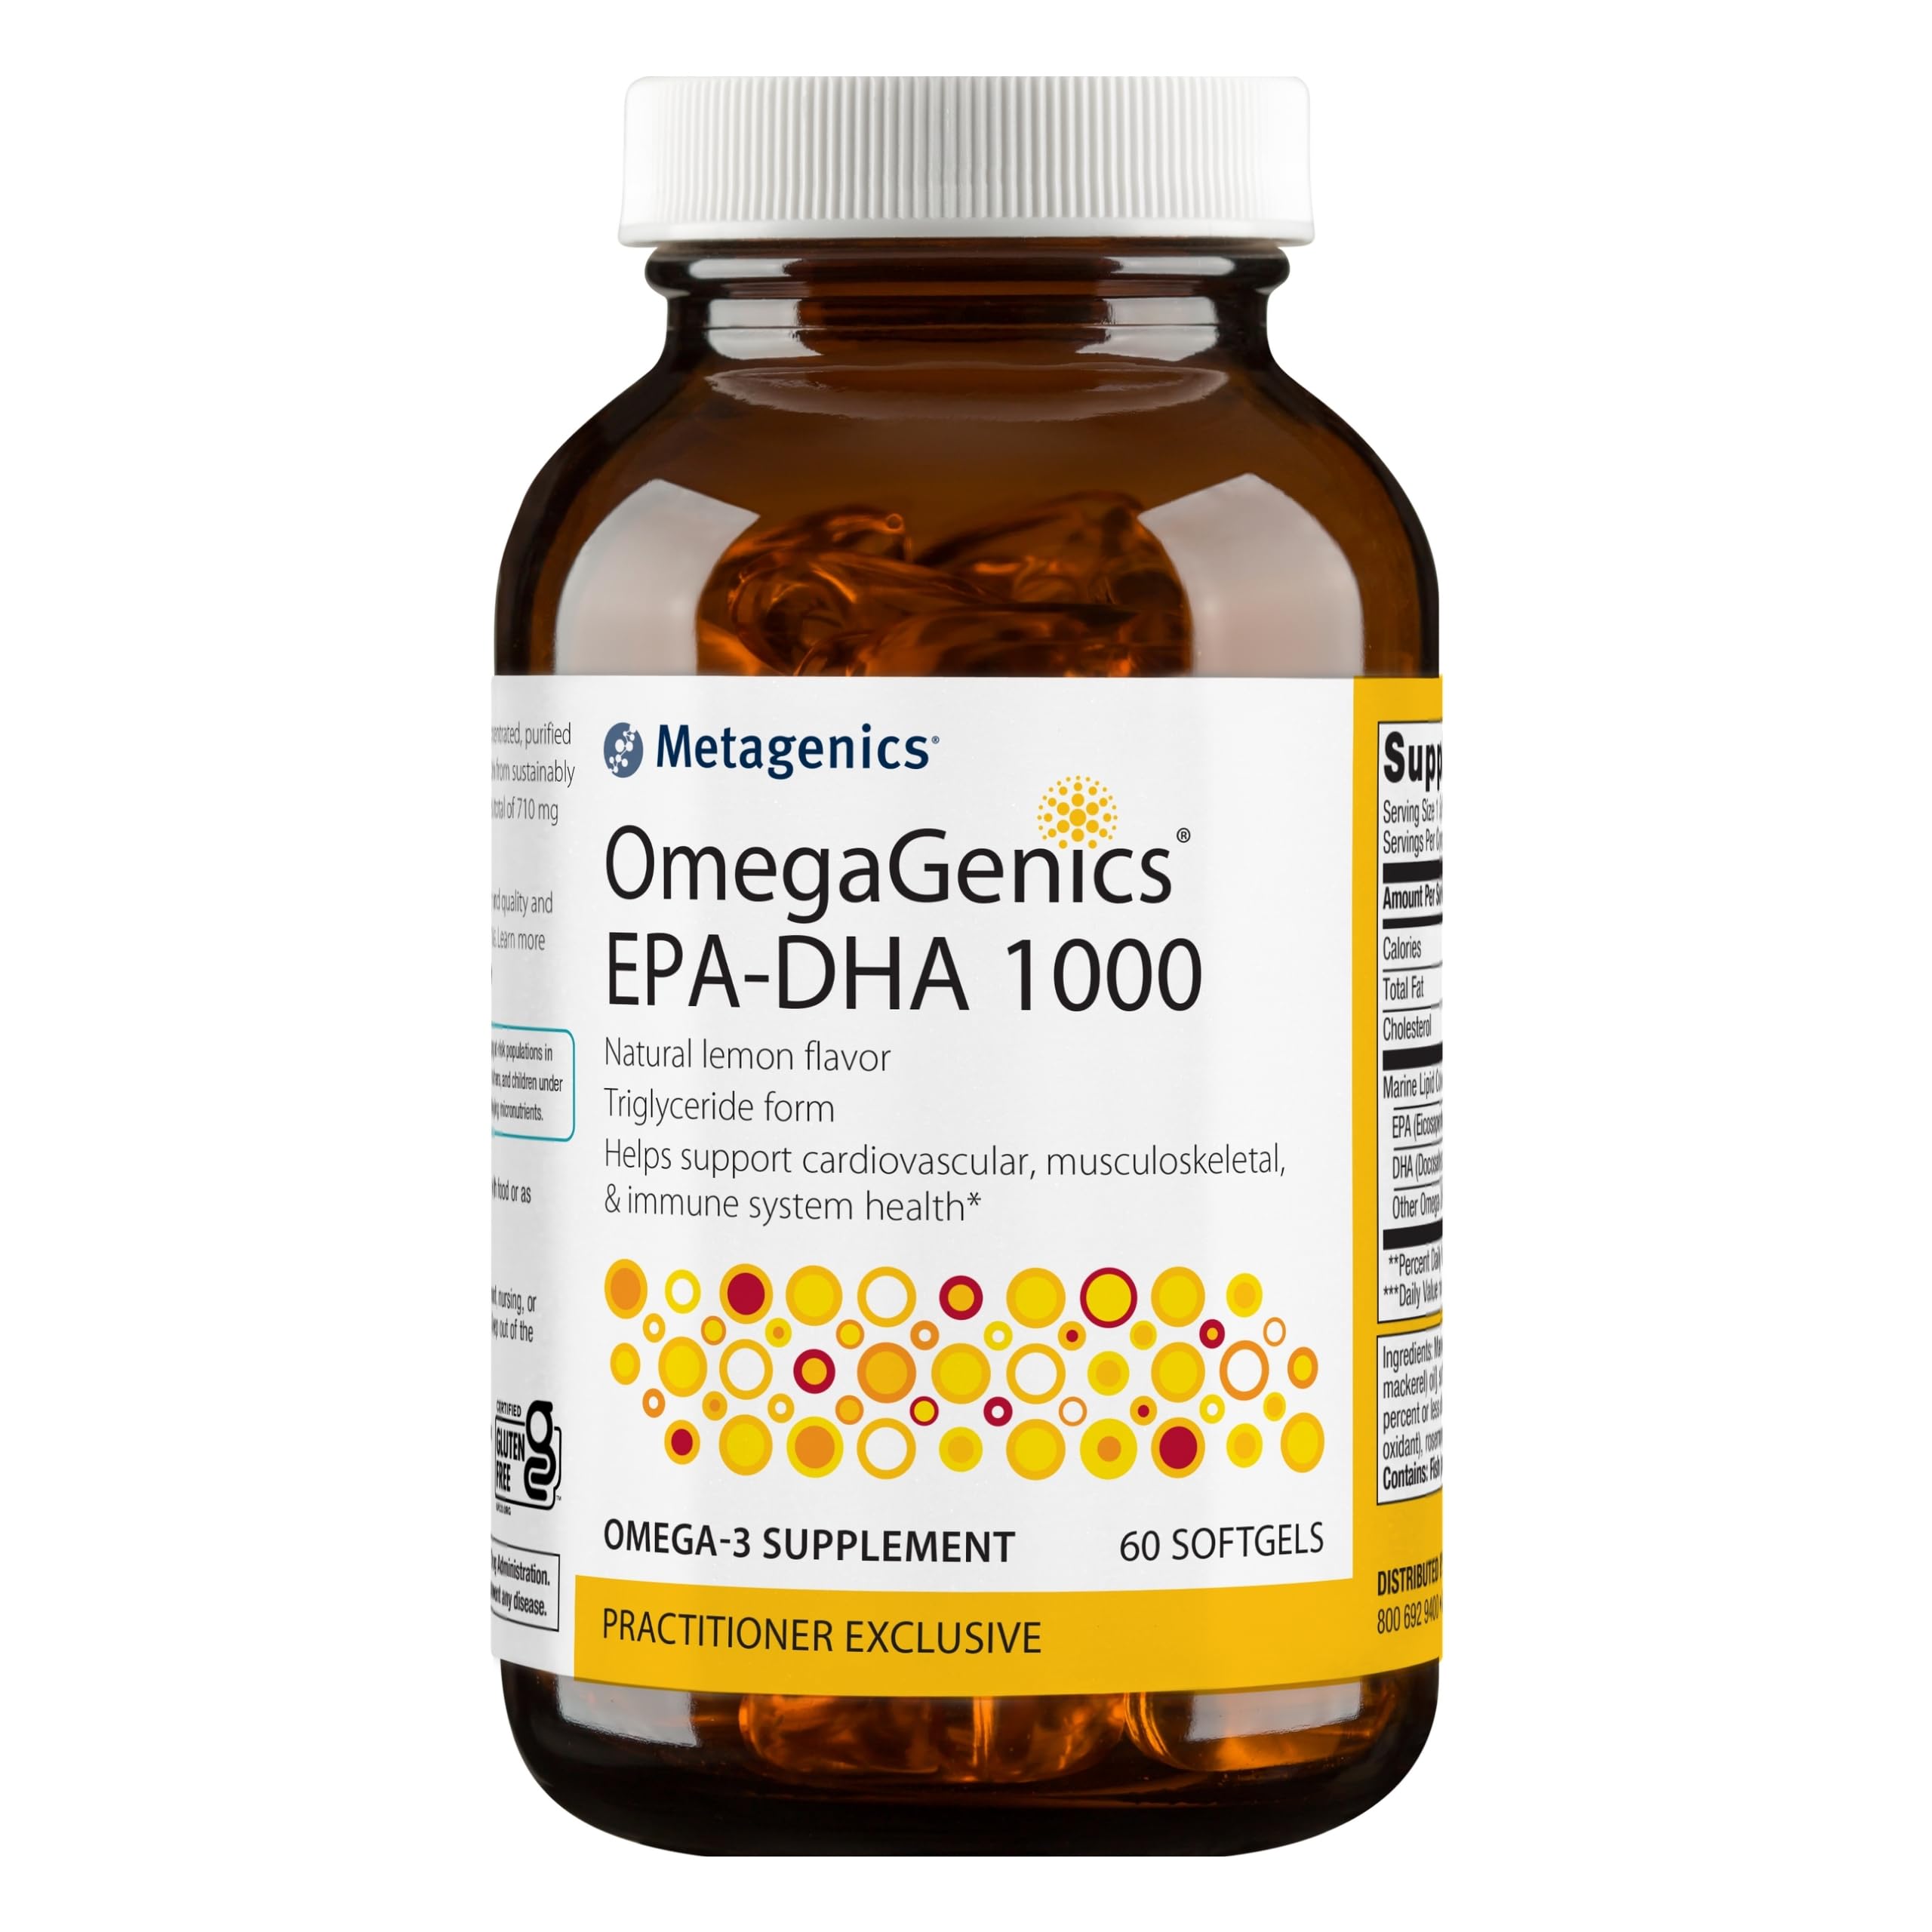 Metagenics OmegaGenics EPA-DHA 1000 Heart Immune Health - 60 Softgels